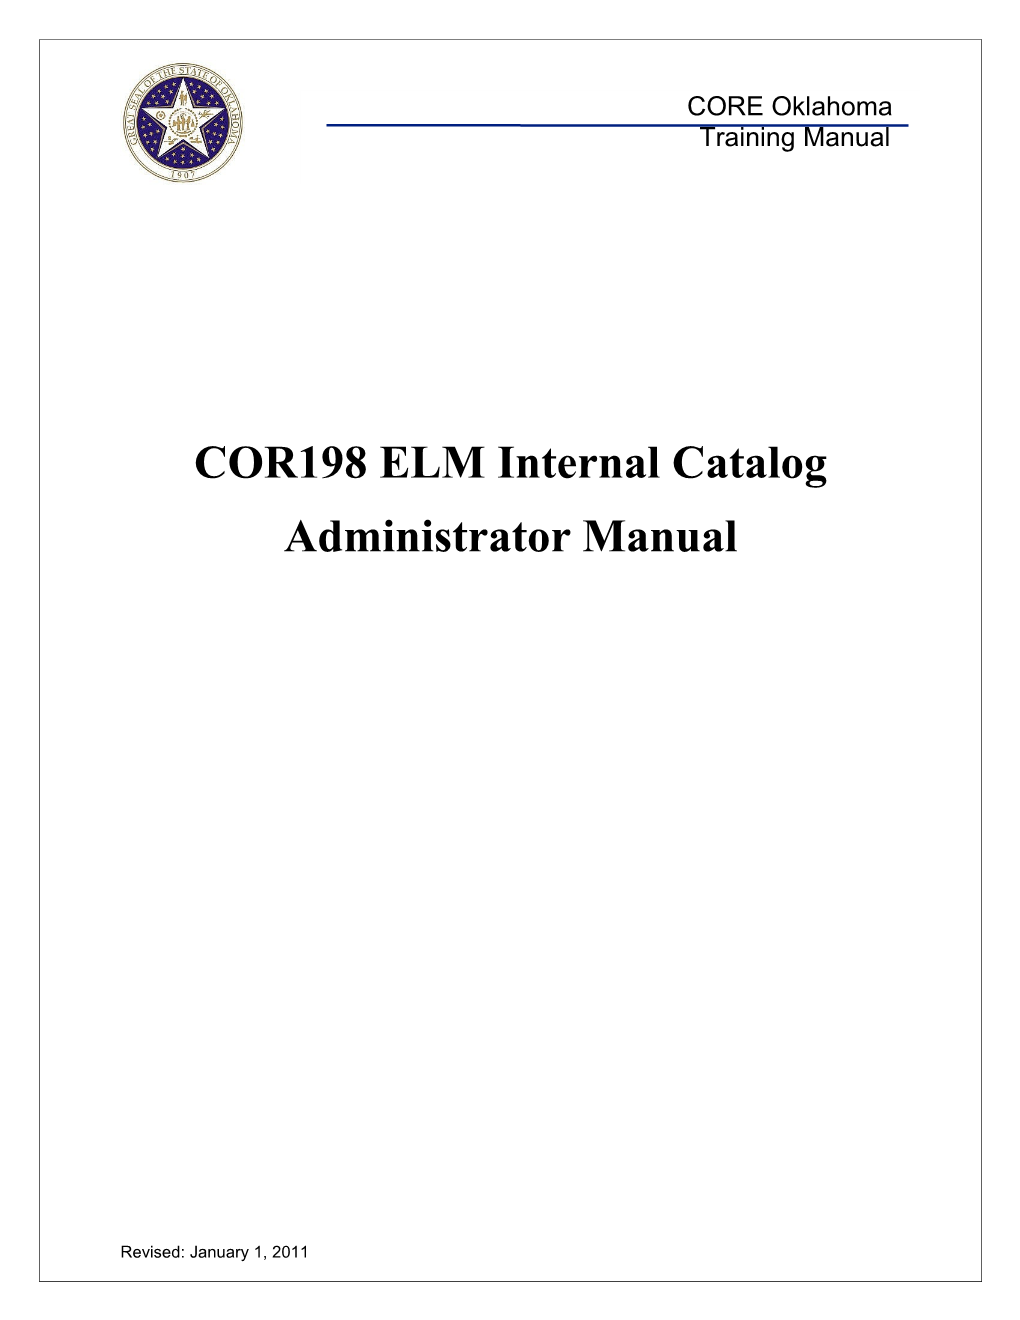 COR 198 Internal Catalog Administrator Manual